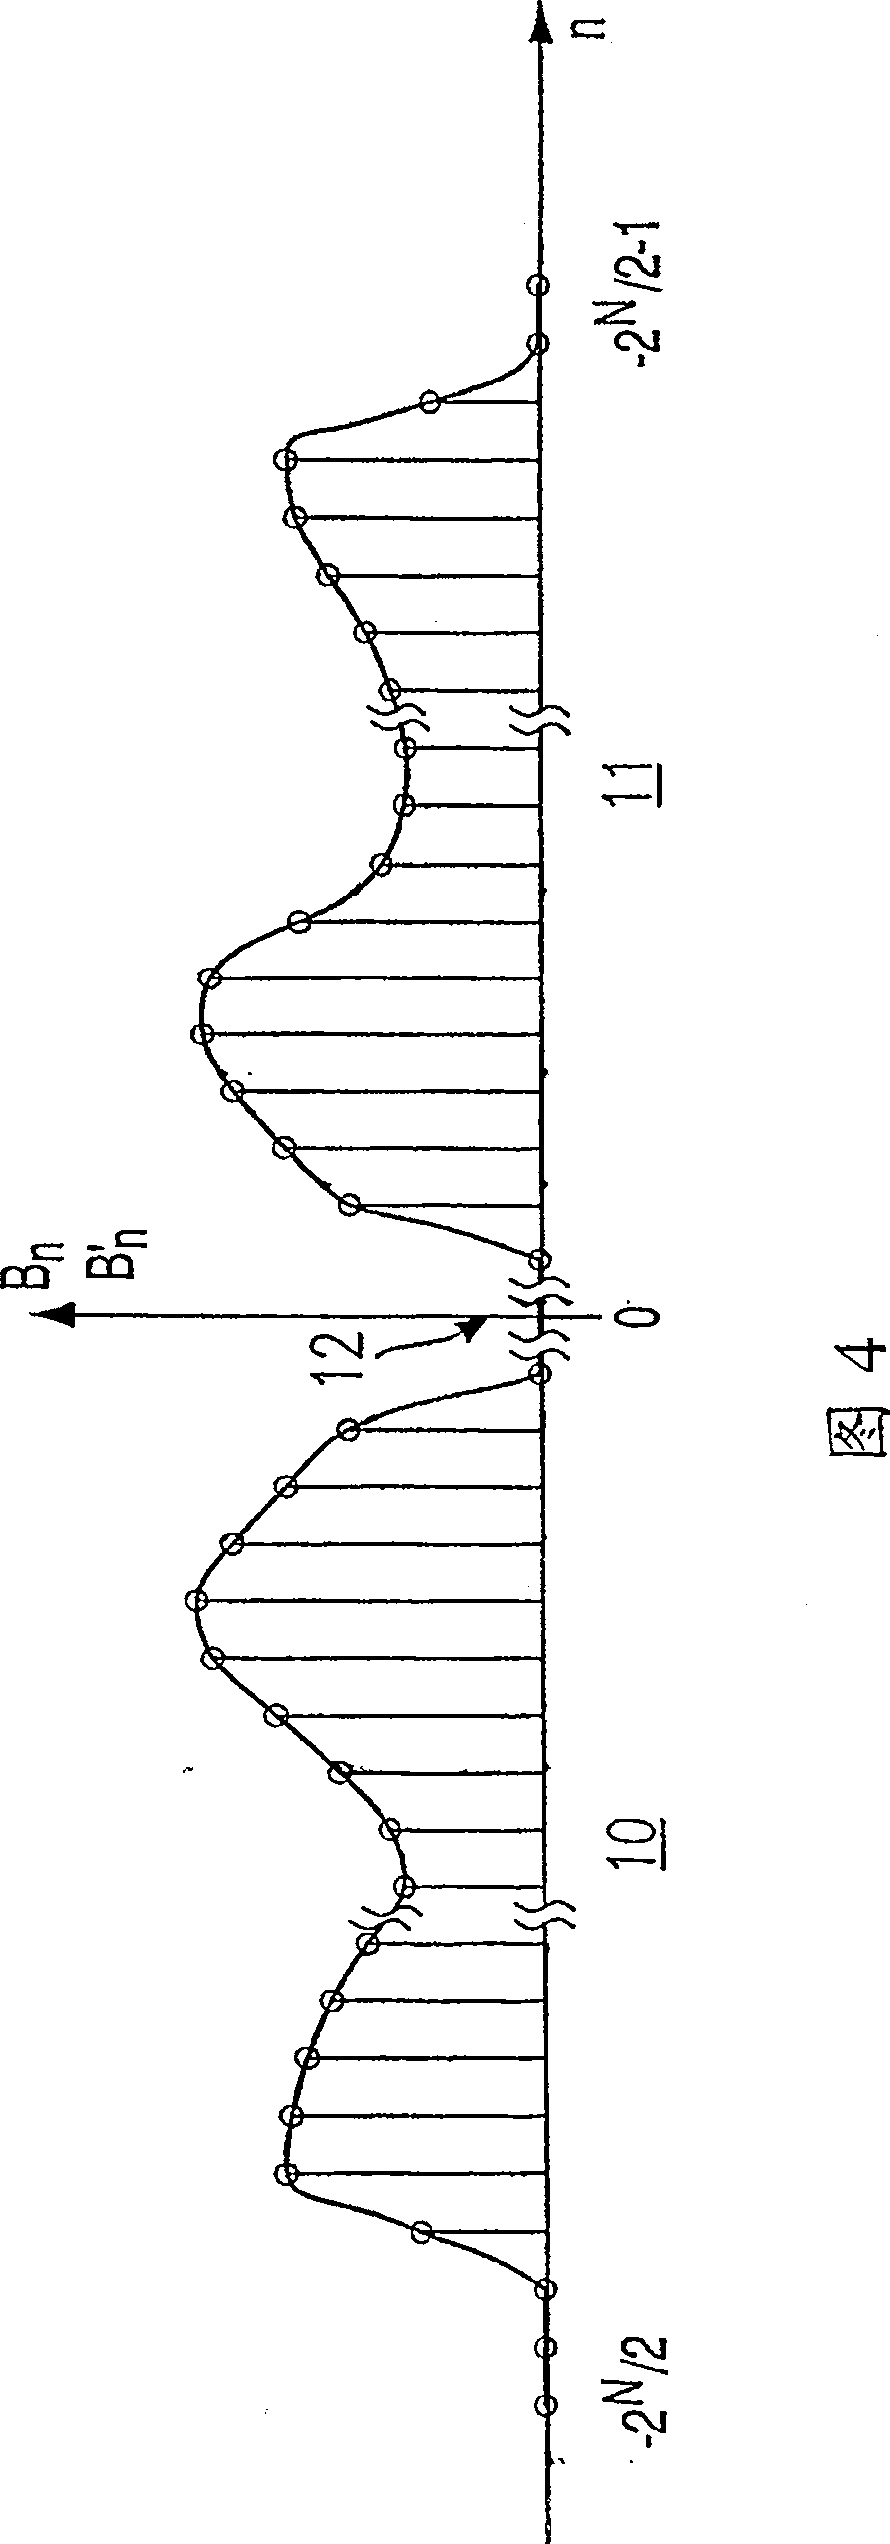 Method for determining envelope lines of modulation signals